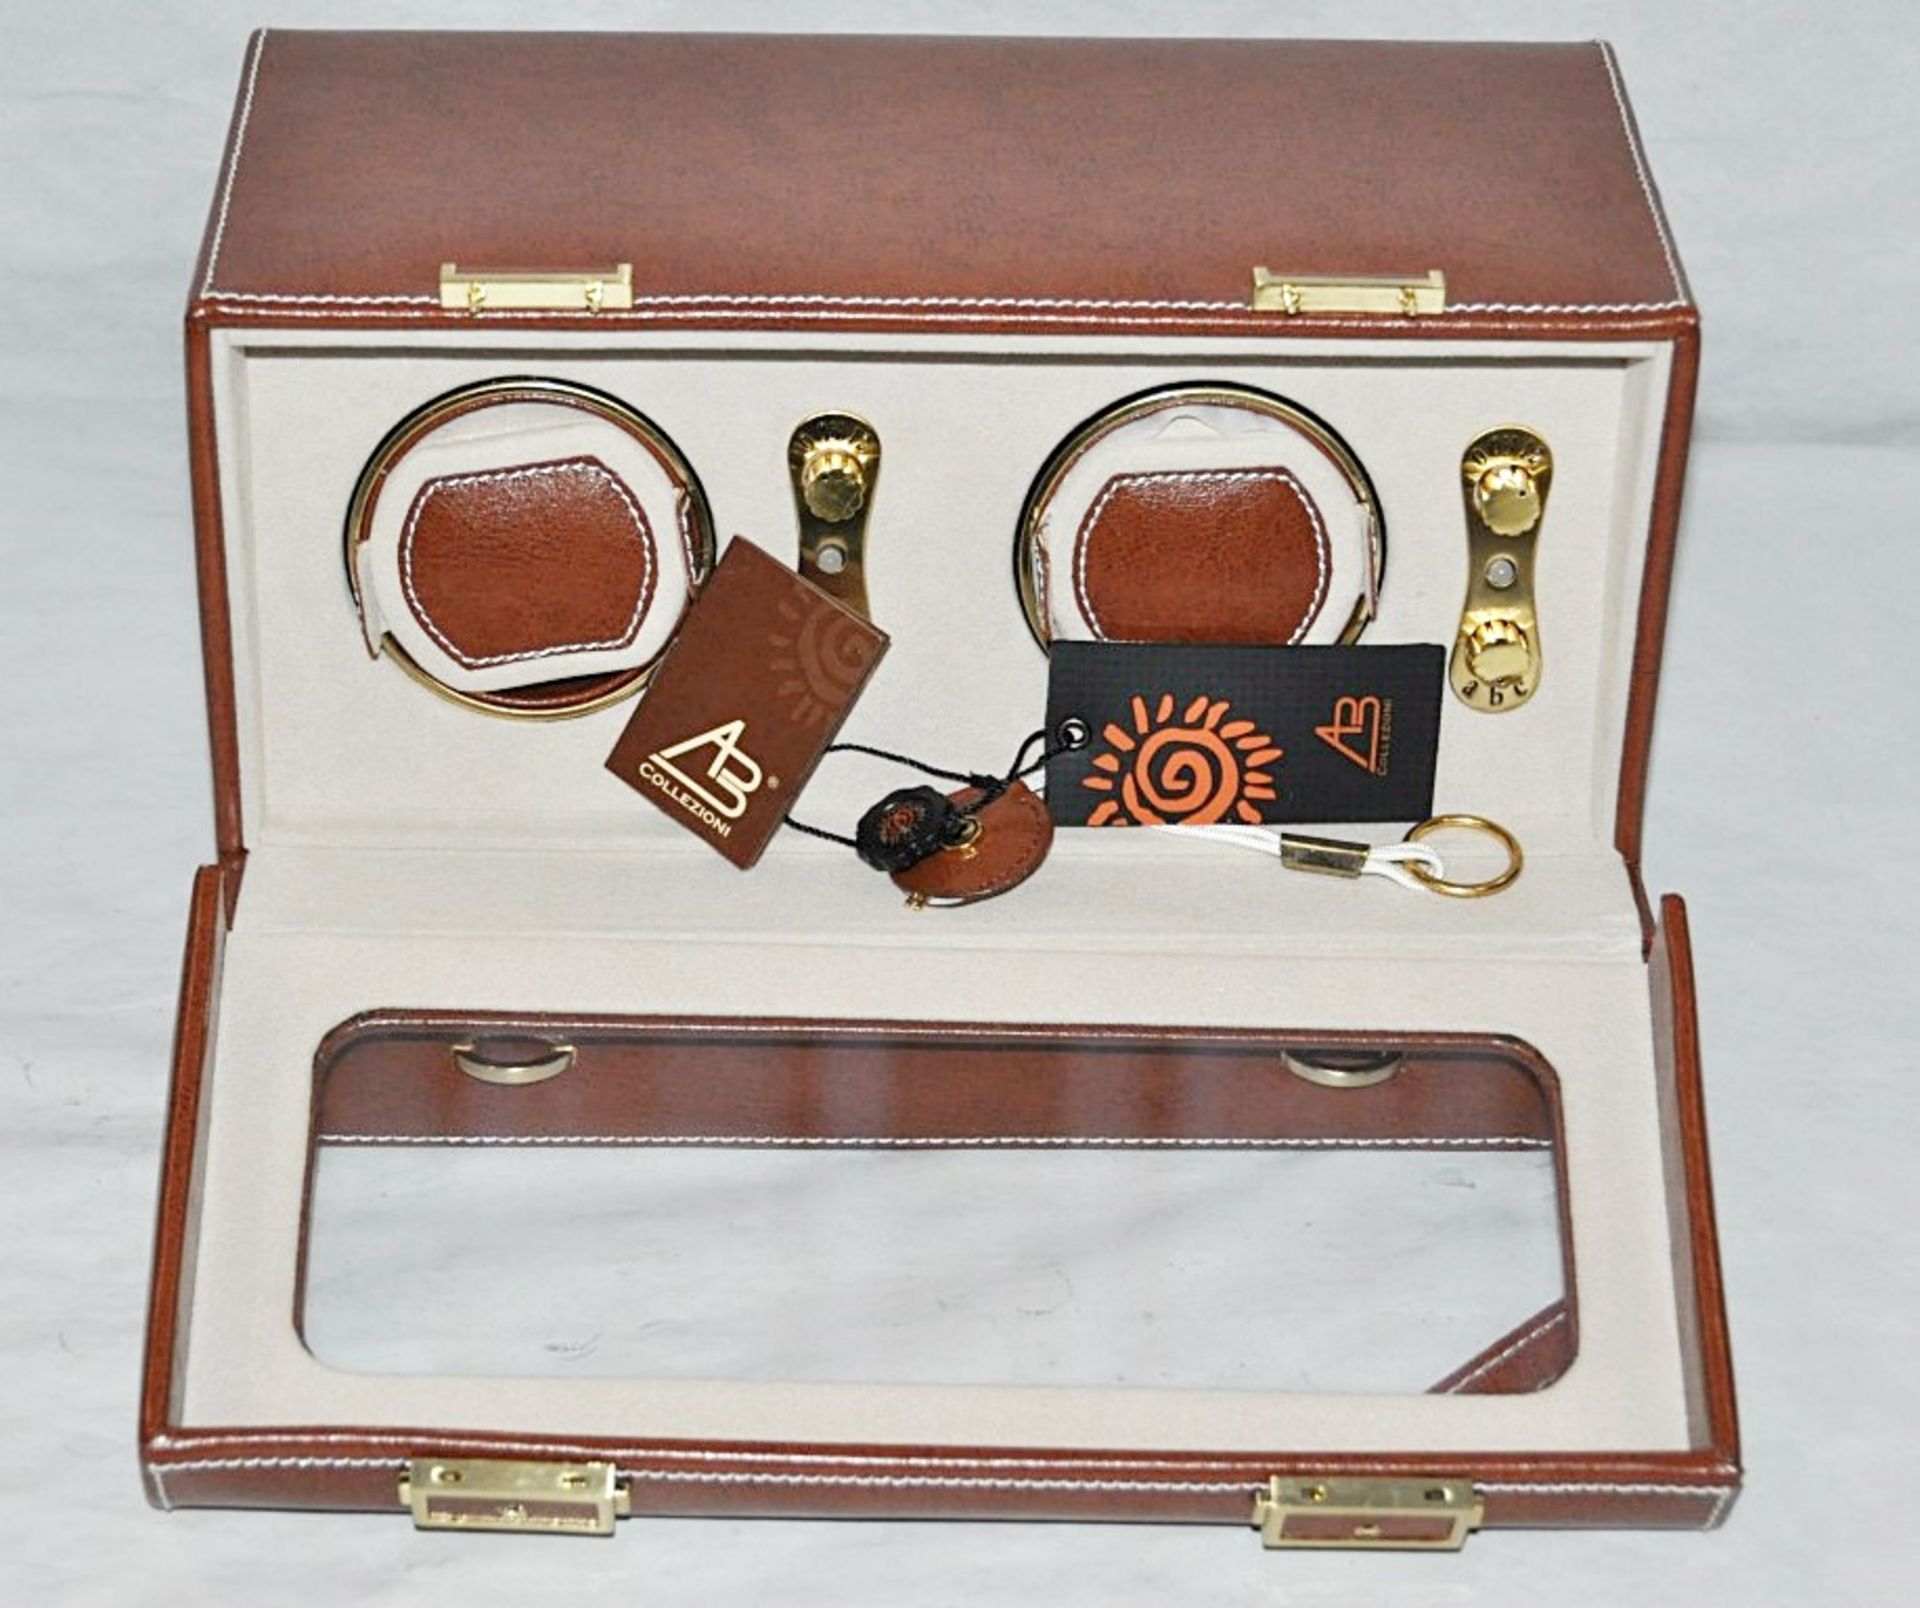 1 x "AB Collezioni" Italian Luxury Automatic Watch Case (30085M) - Ref LT106 – Genuine Leather - Image 4 of 6